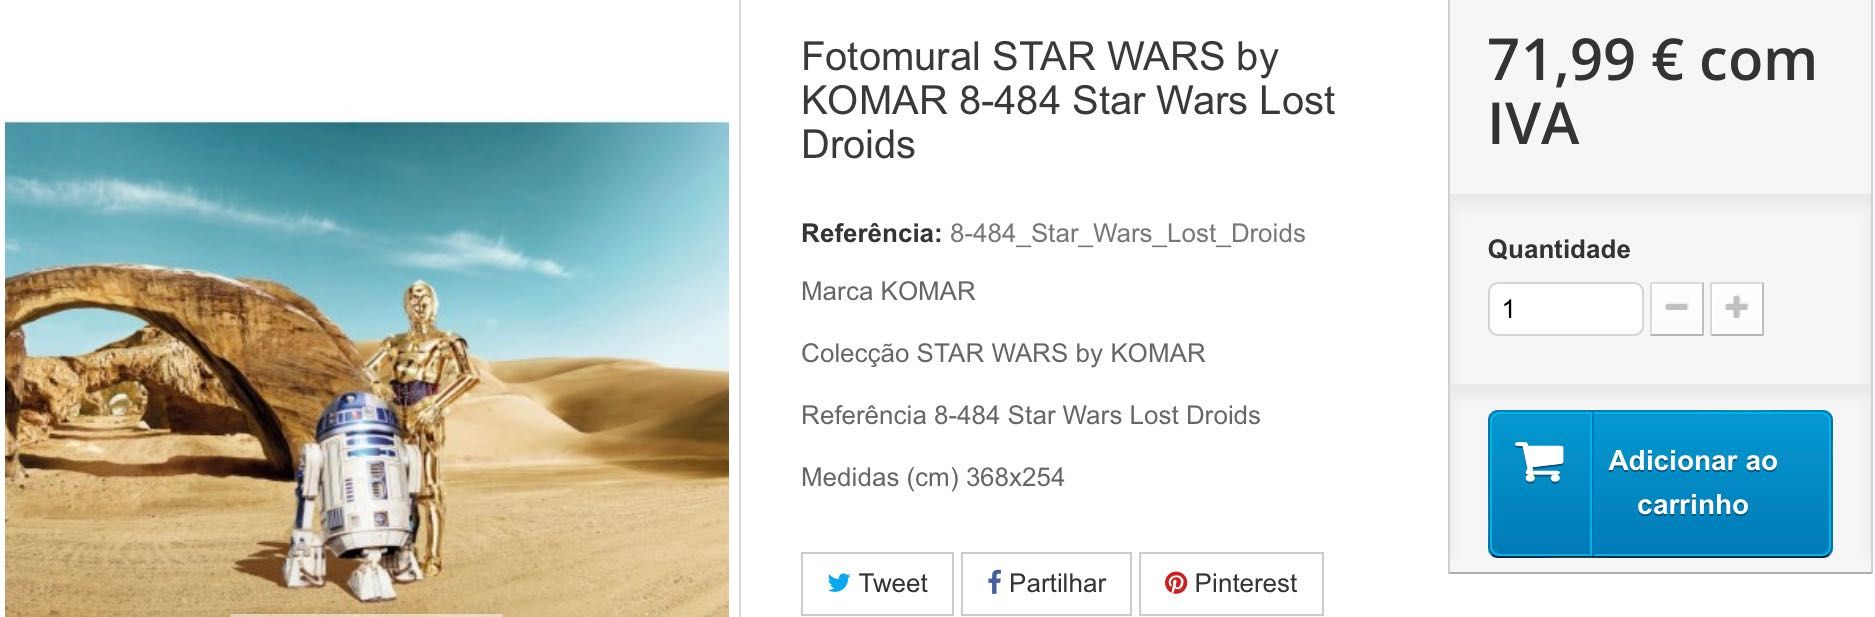 Fotomural STAR WARS by KOMAR 8-484 Star Wars Lost Droids